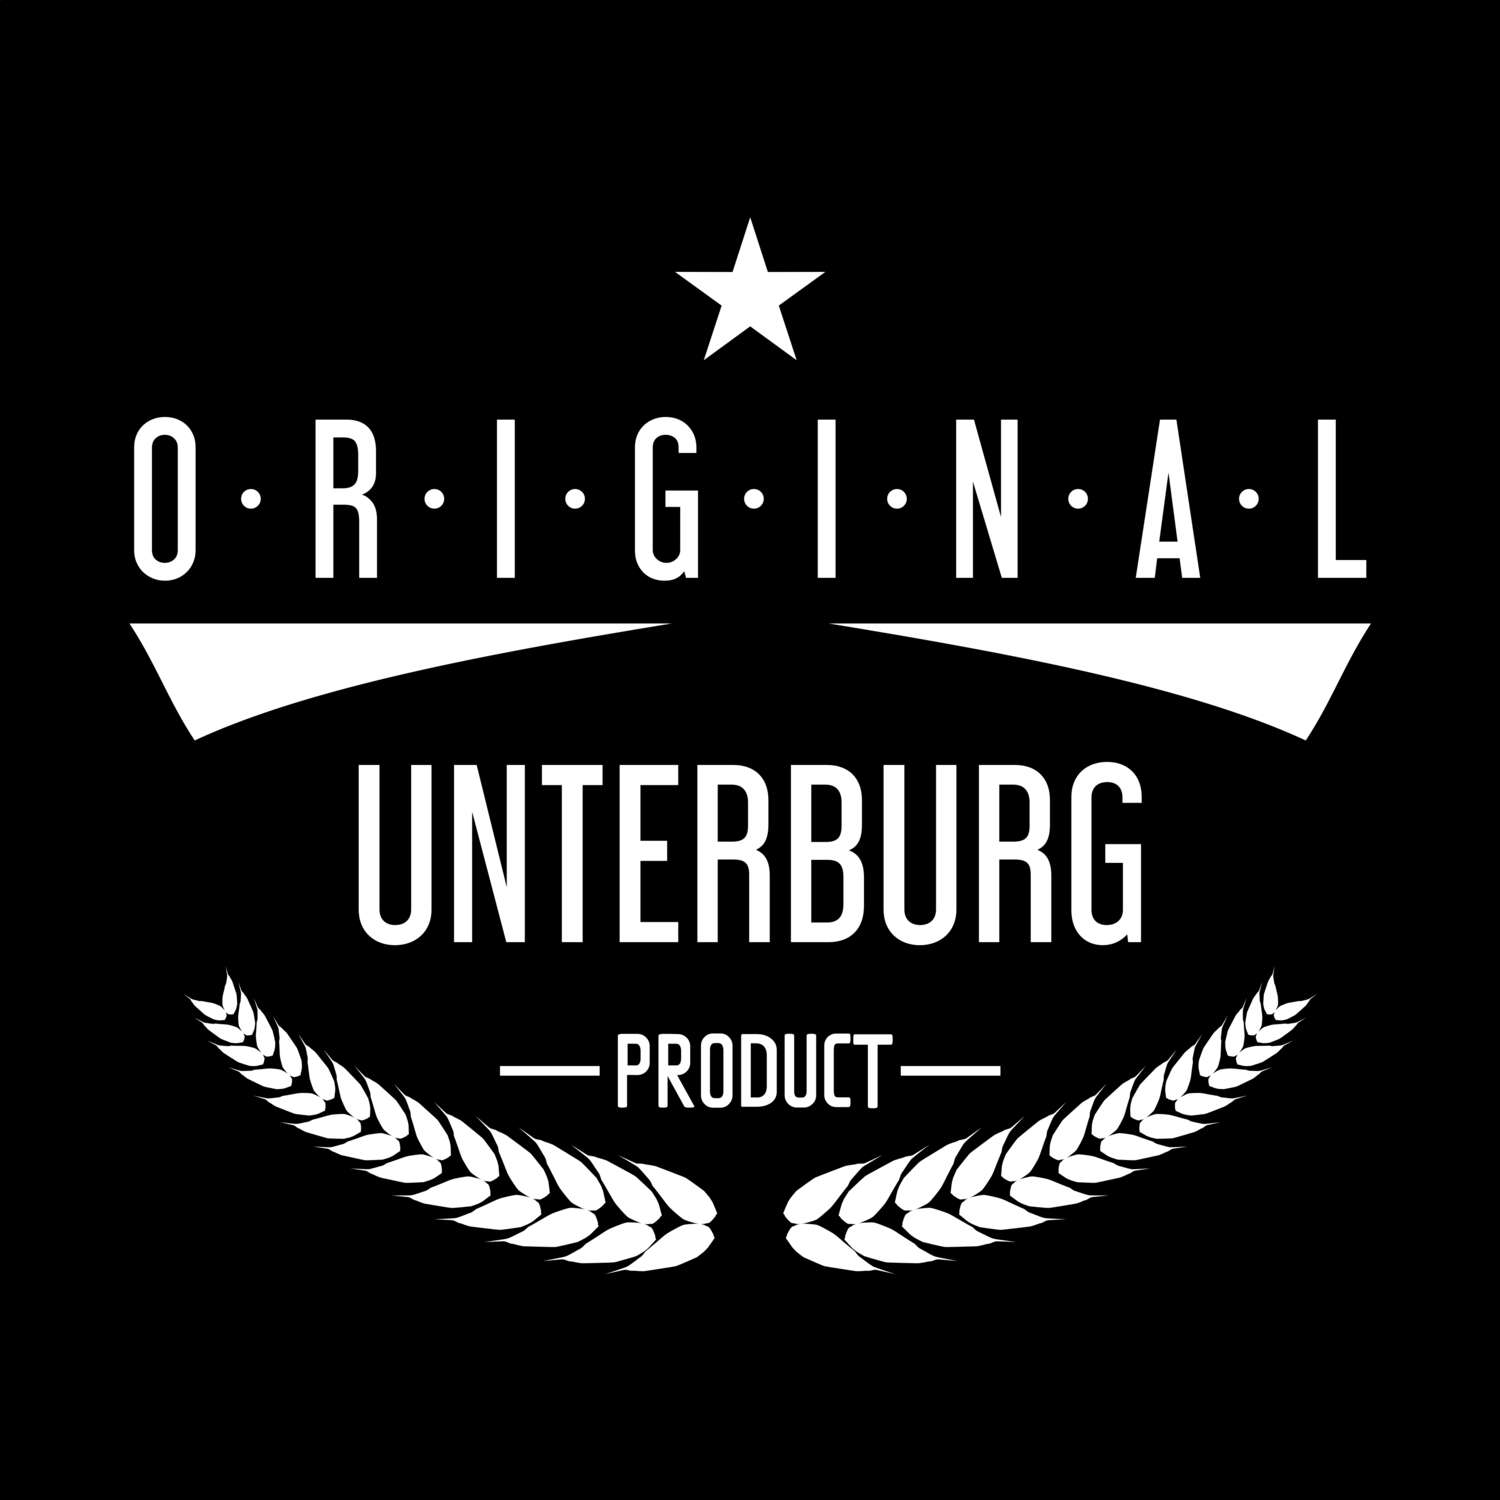 Unterburg T-Shirt »Original Product«